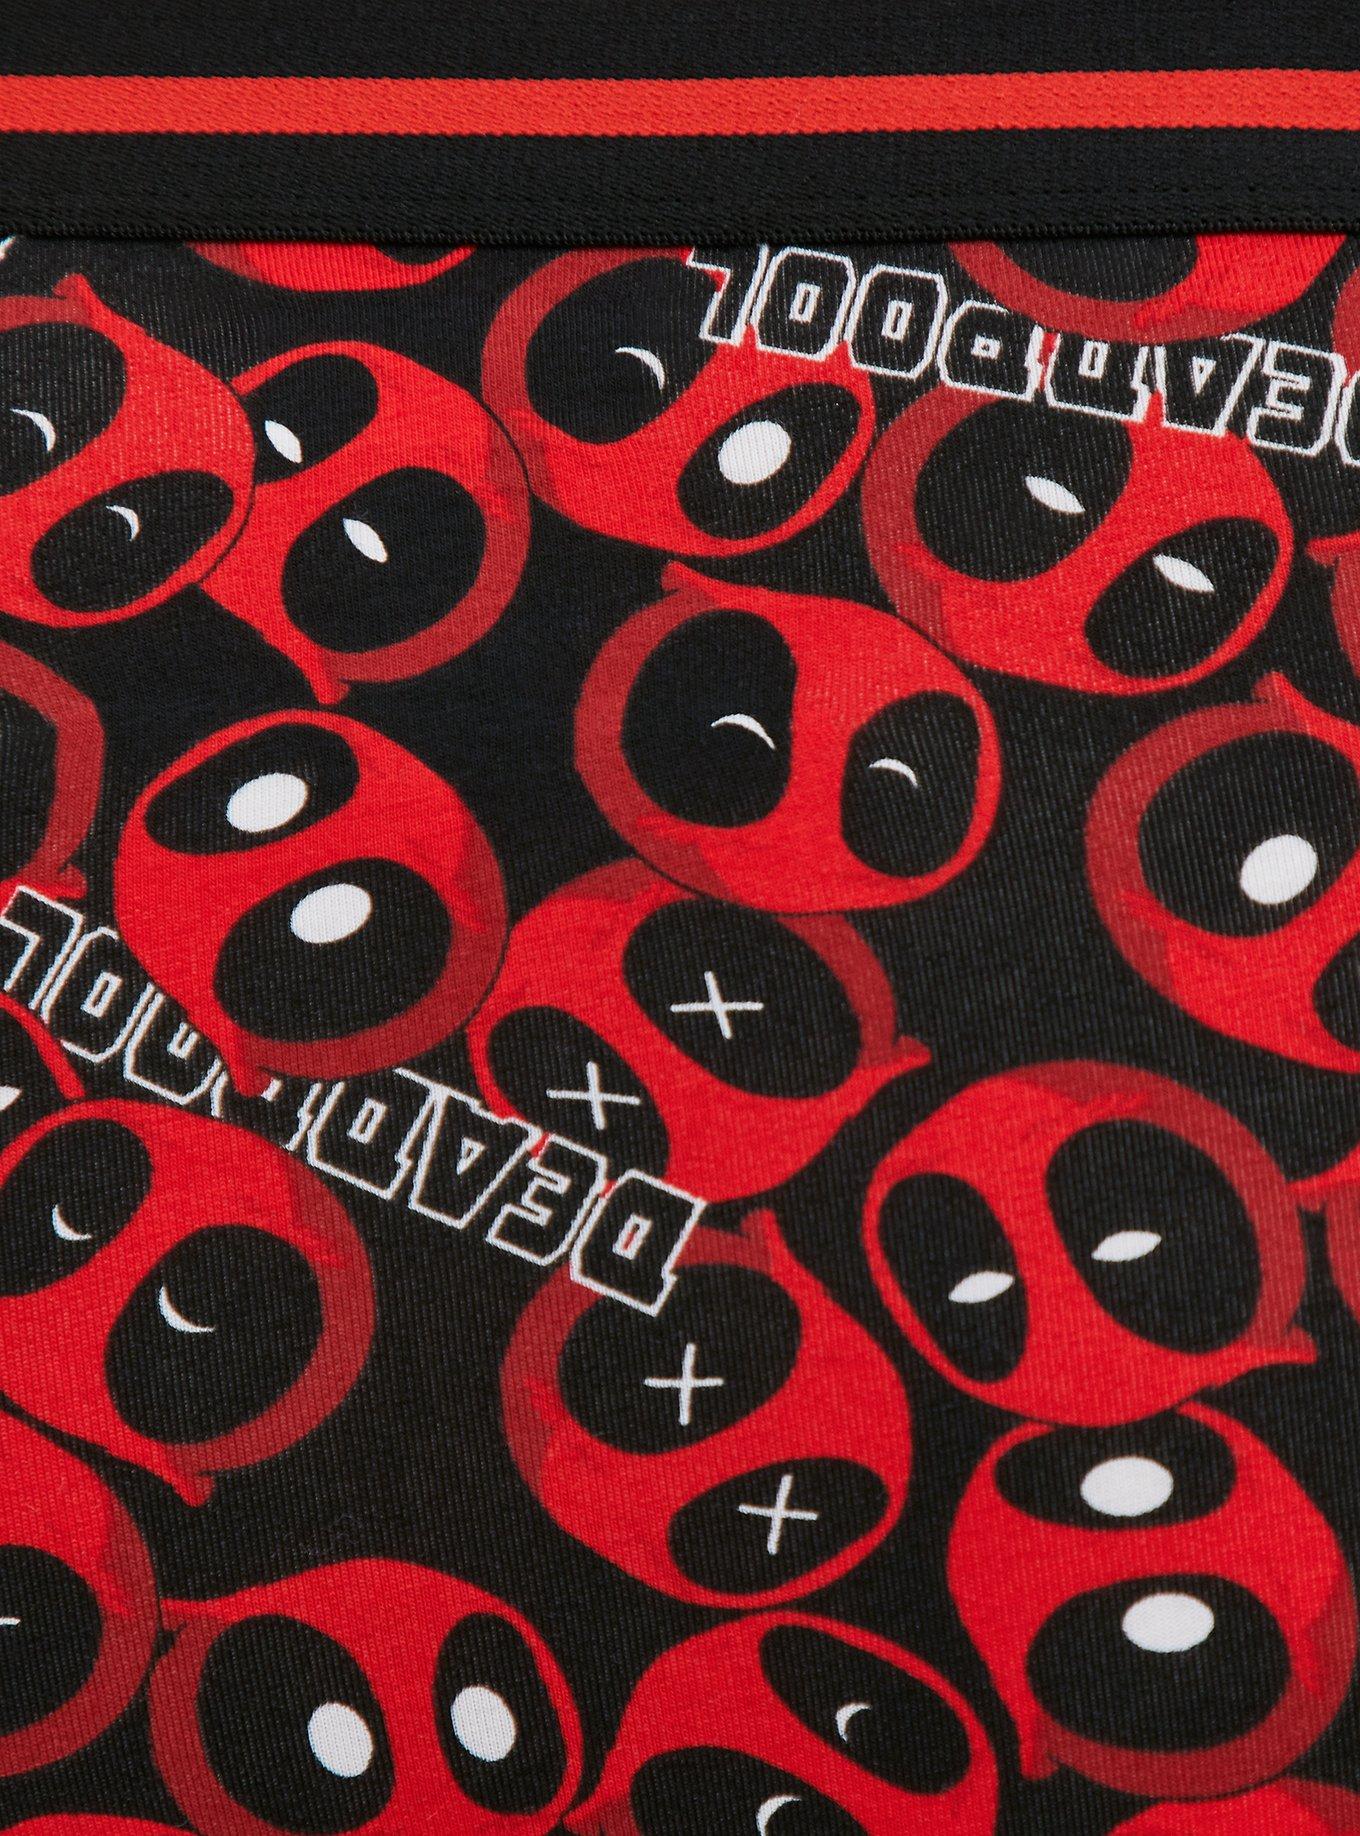 torrid, Intimates & Sleepwear, Torrid Marvel Deadpool Logo Red Cotton  Hipster Panty Underwear Sz 2